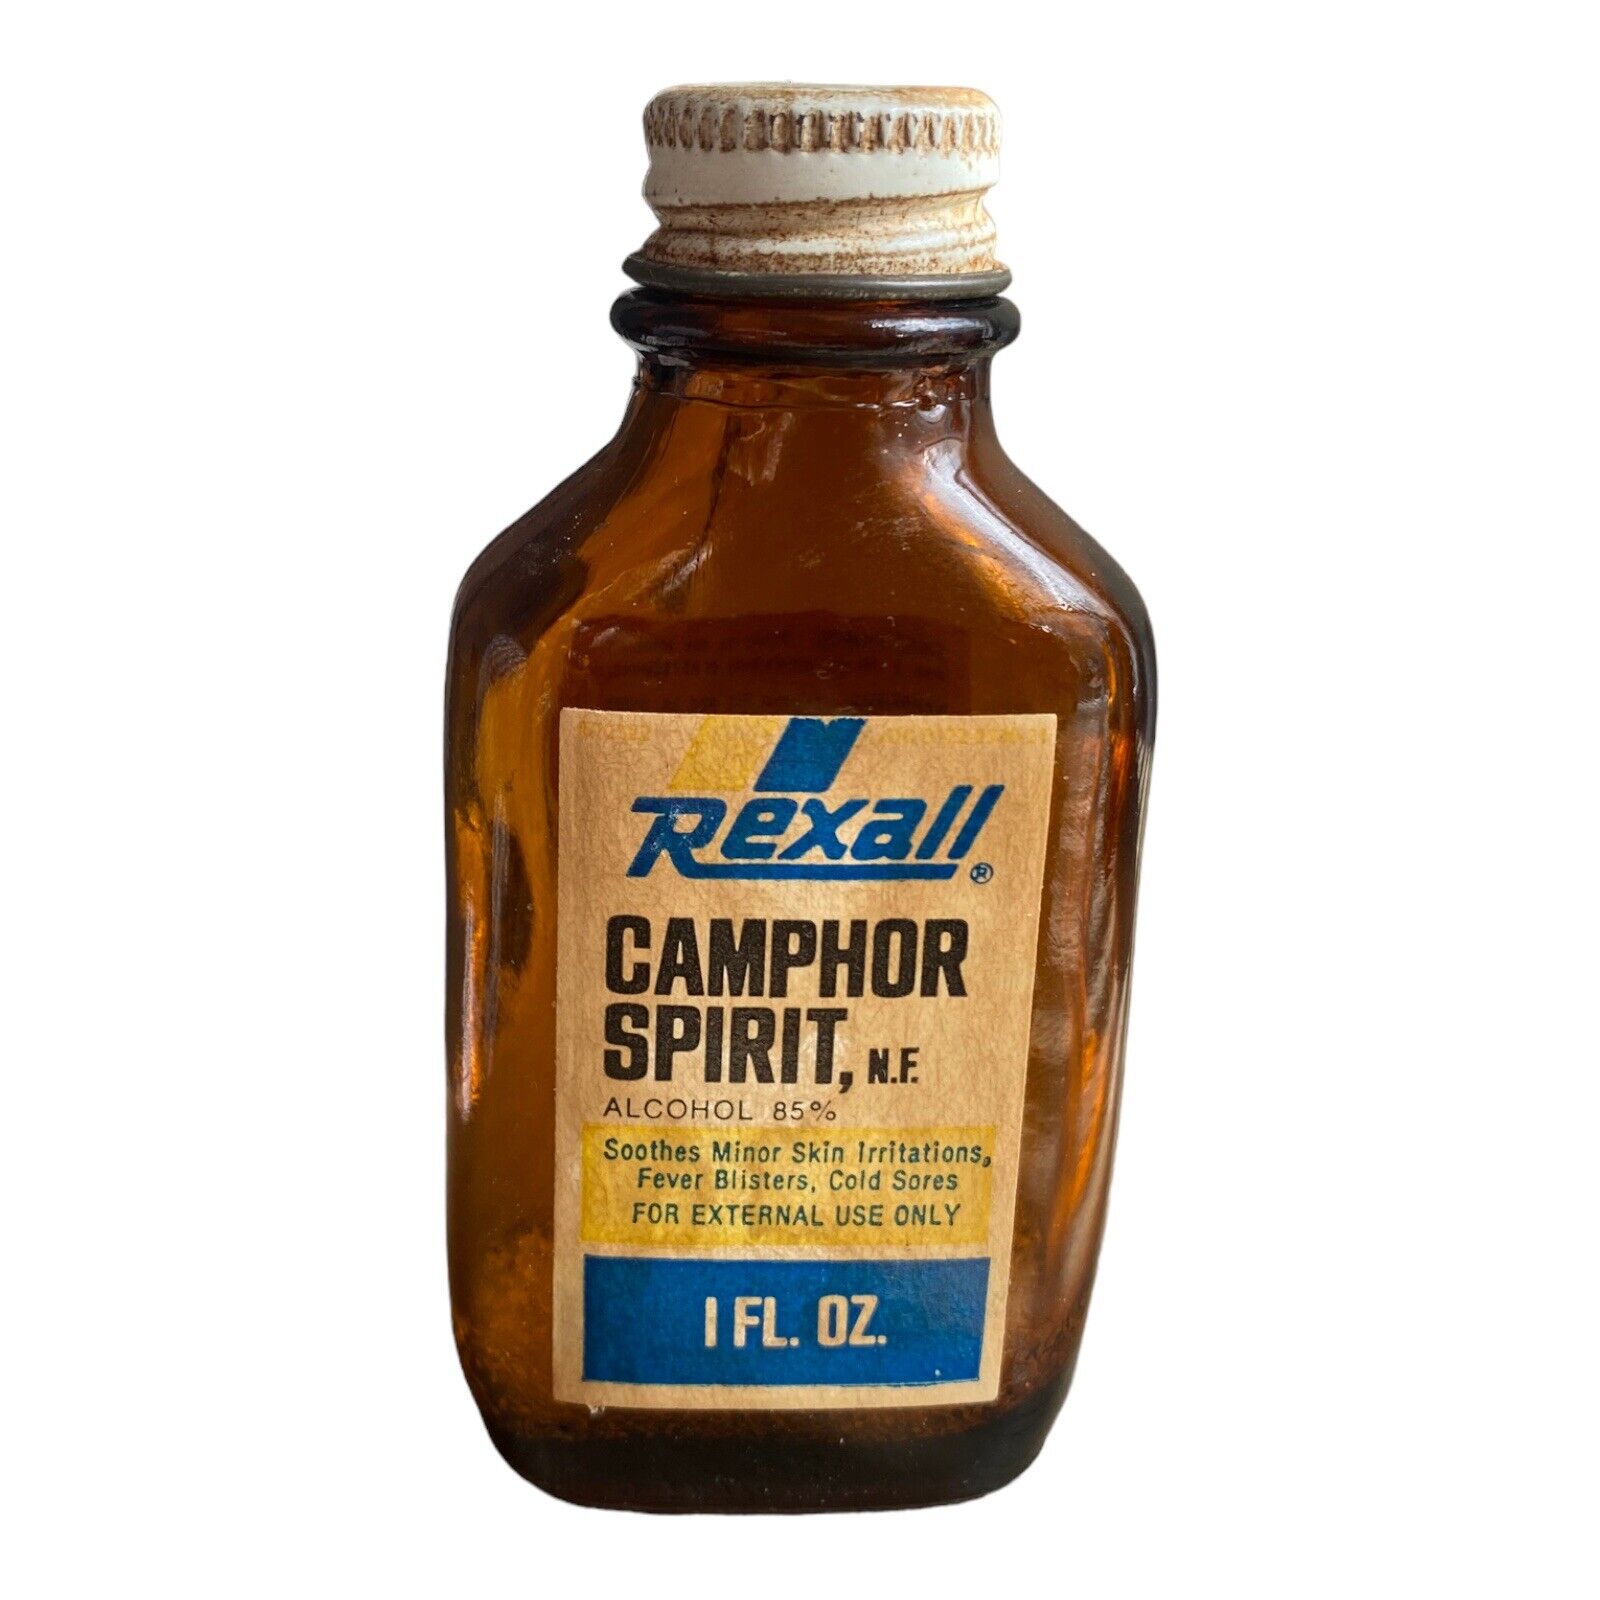 Rexall Camphor Spirit 1 Oz Amber Glass Medicine Bottle VTG Apothecary Tincture